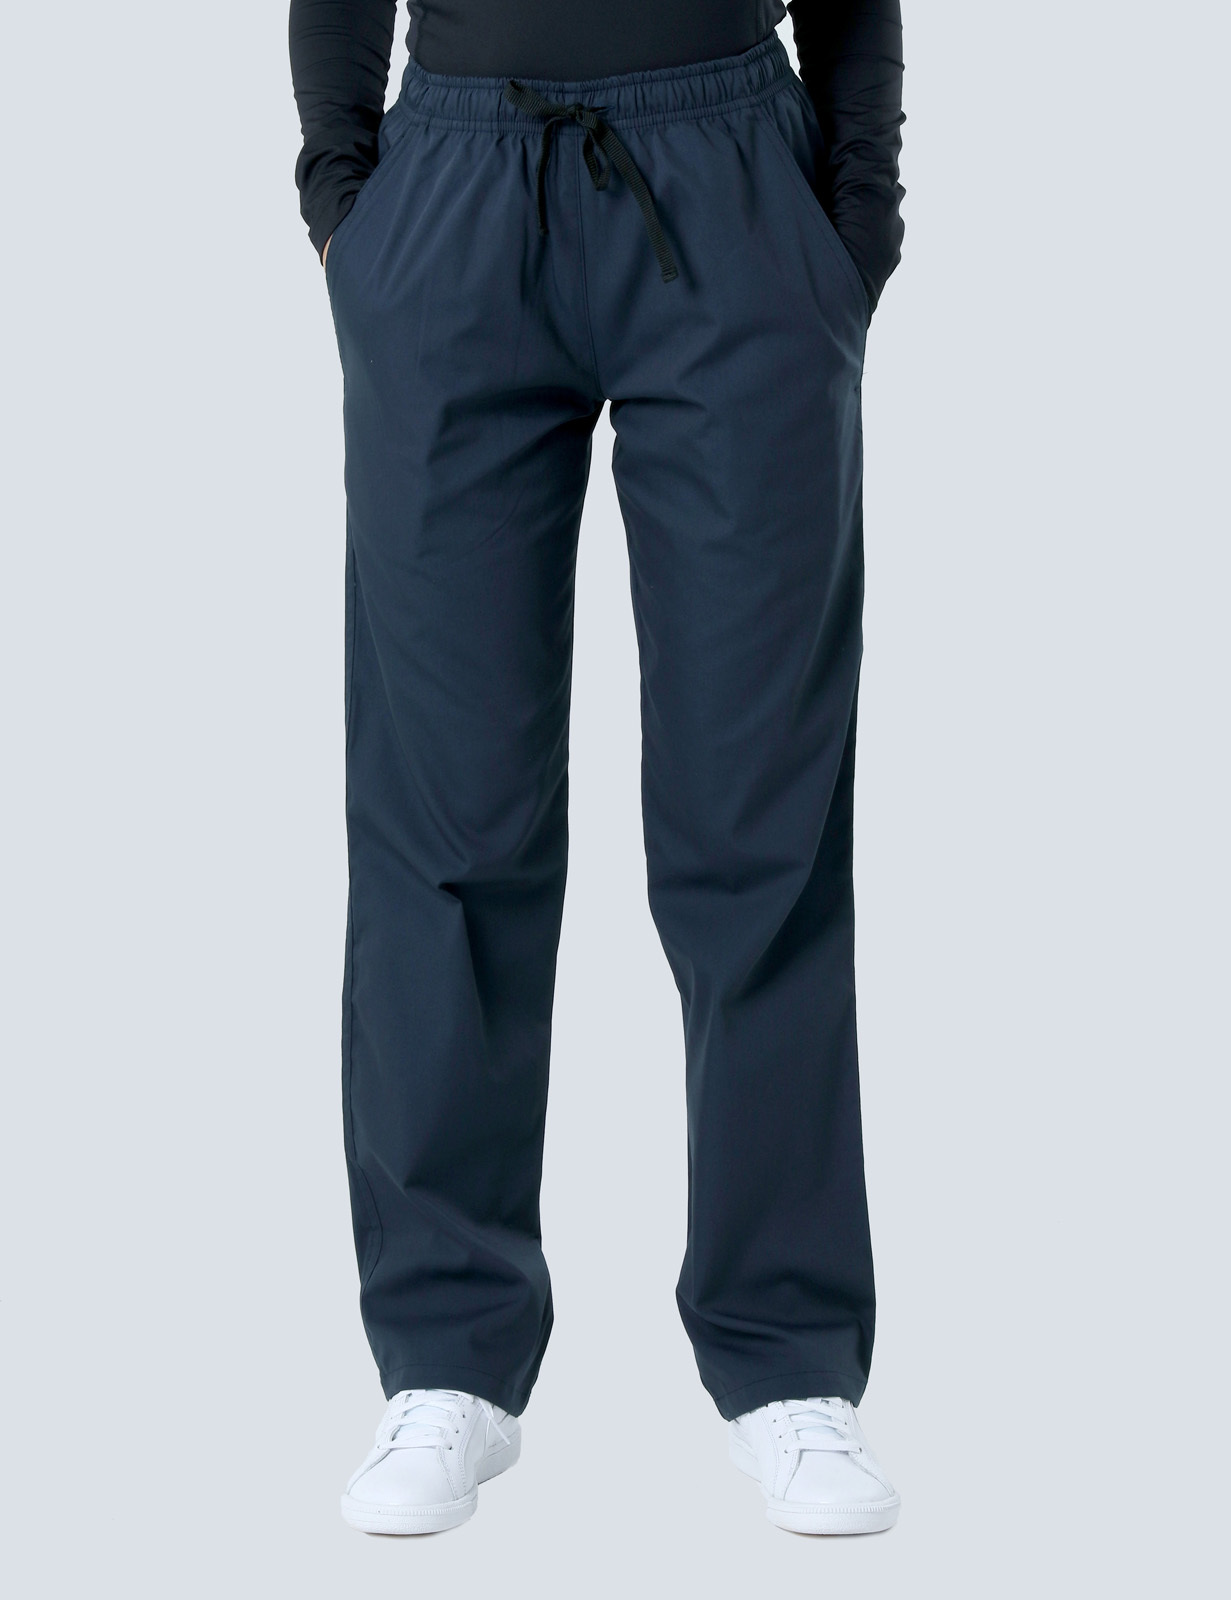 Women's Regular Cut Pants - Navy - 2X Large